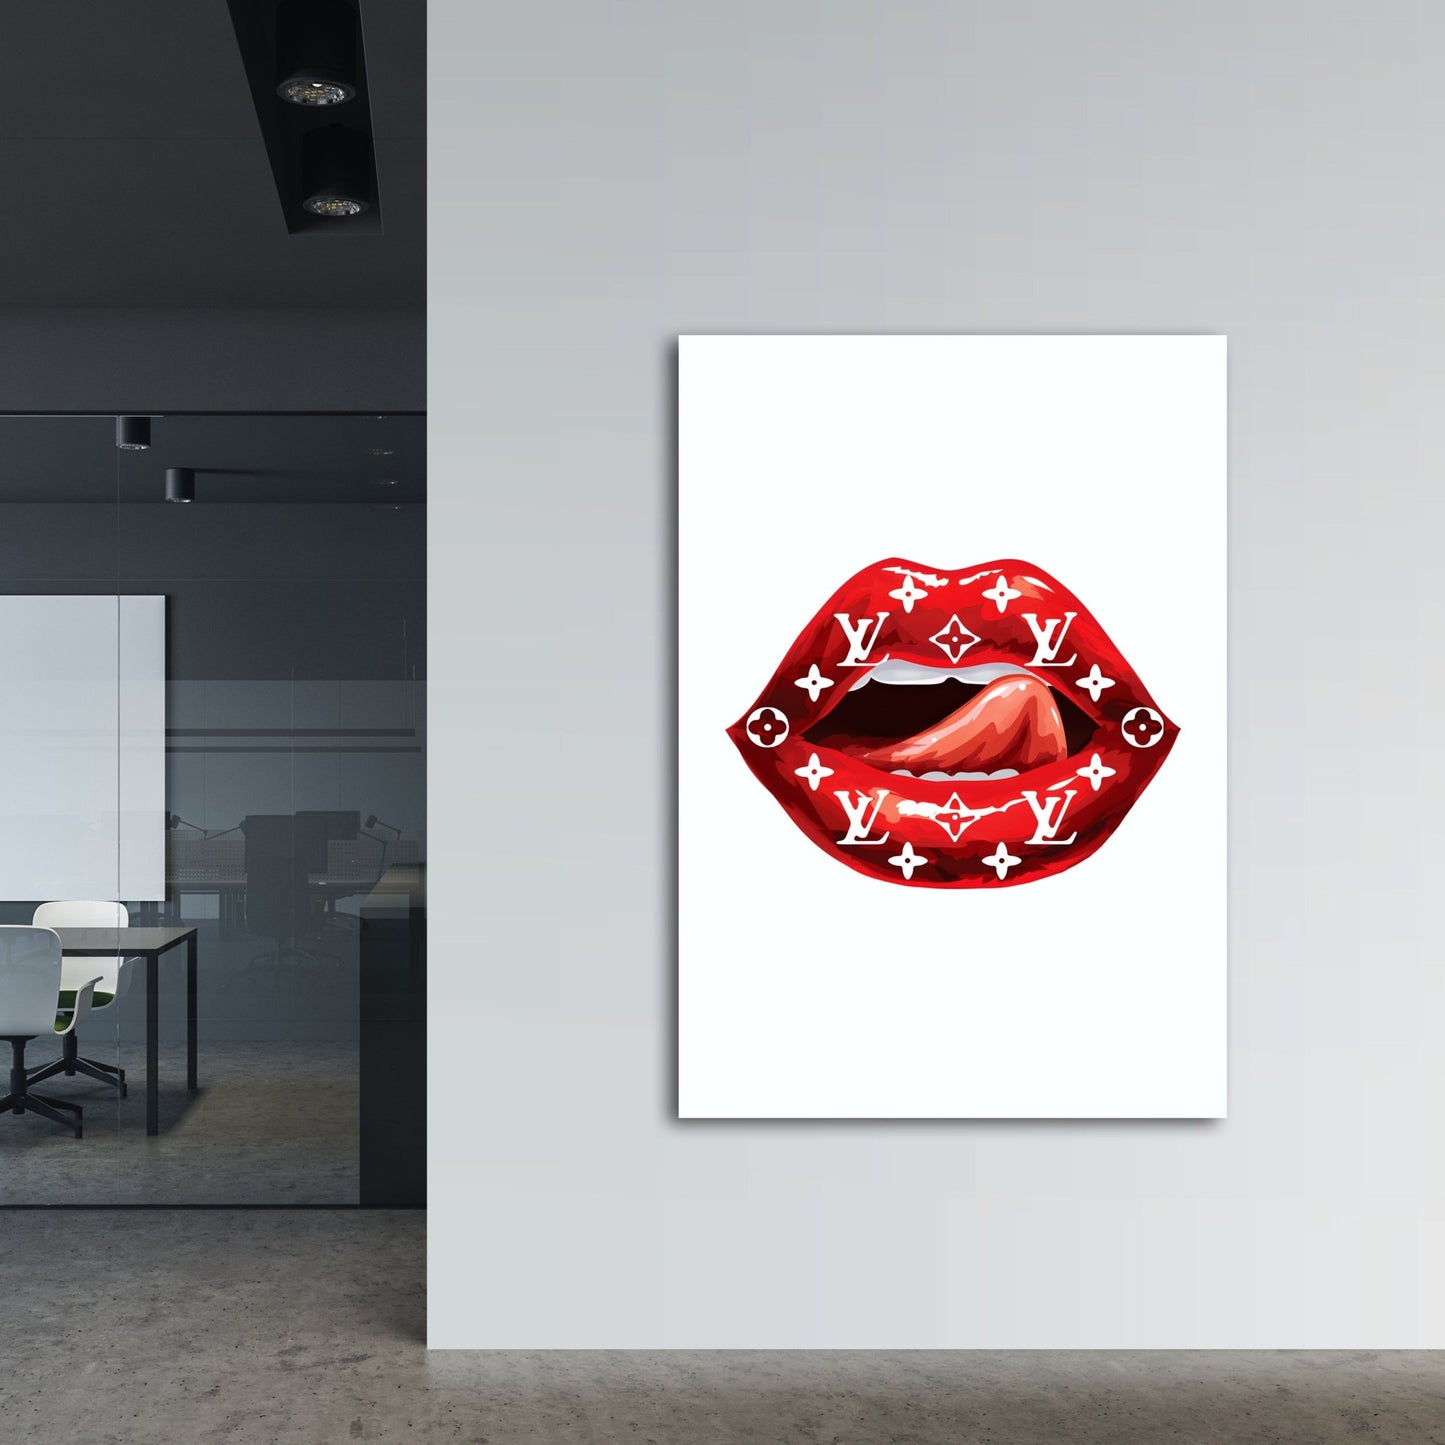 Designer Lips Canvas Wall Art 